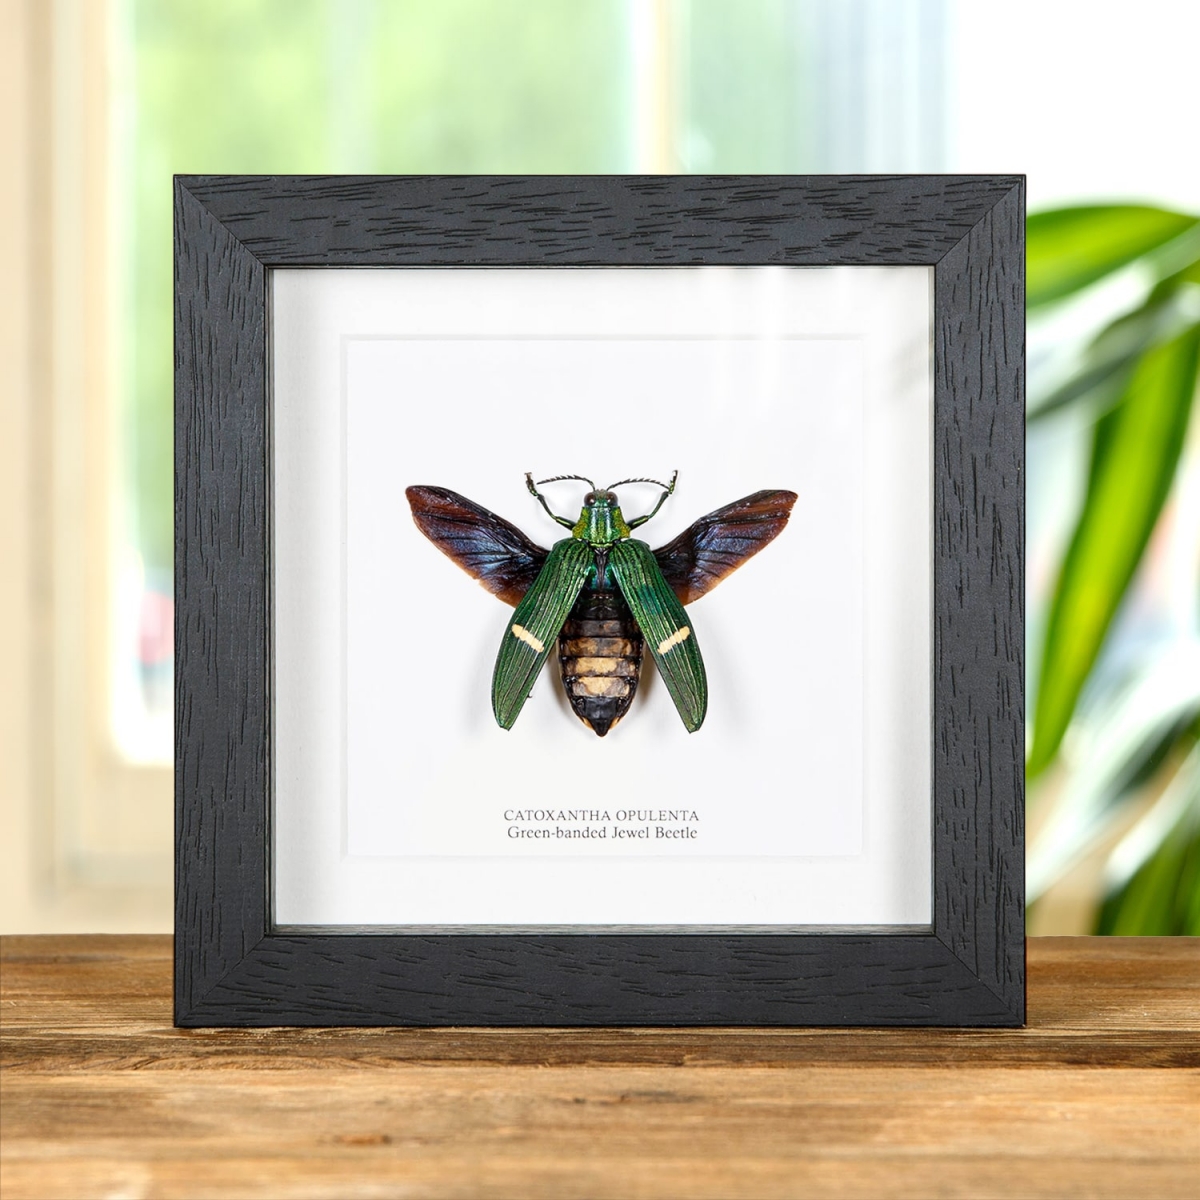 Minibeast Green-banded Jewel Beetle In Box Frame (Catoxantha opulenta)